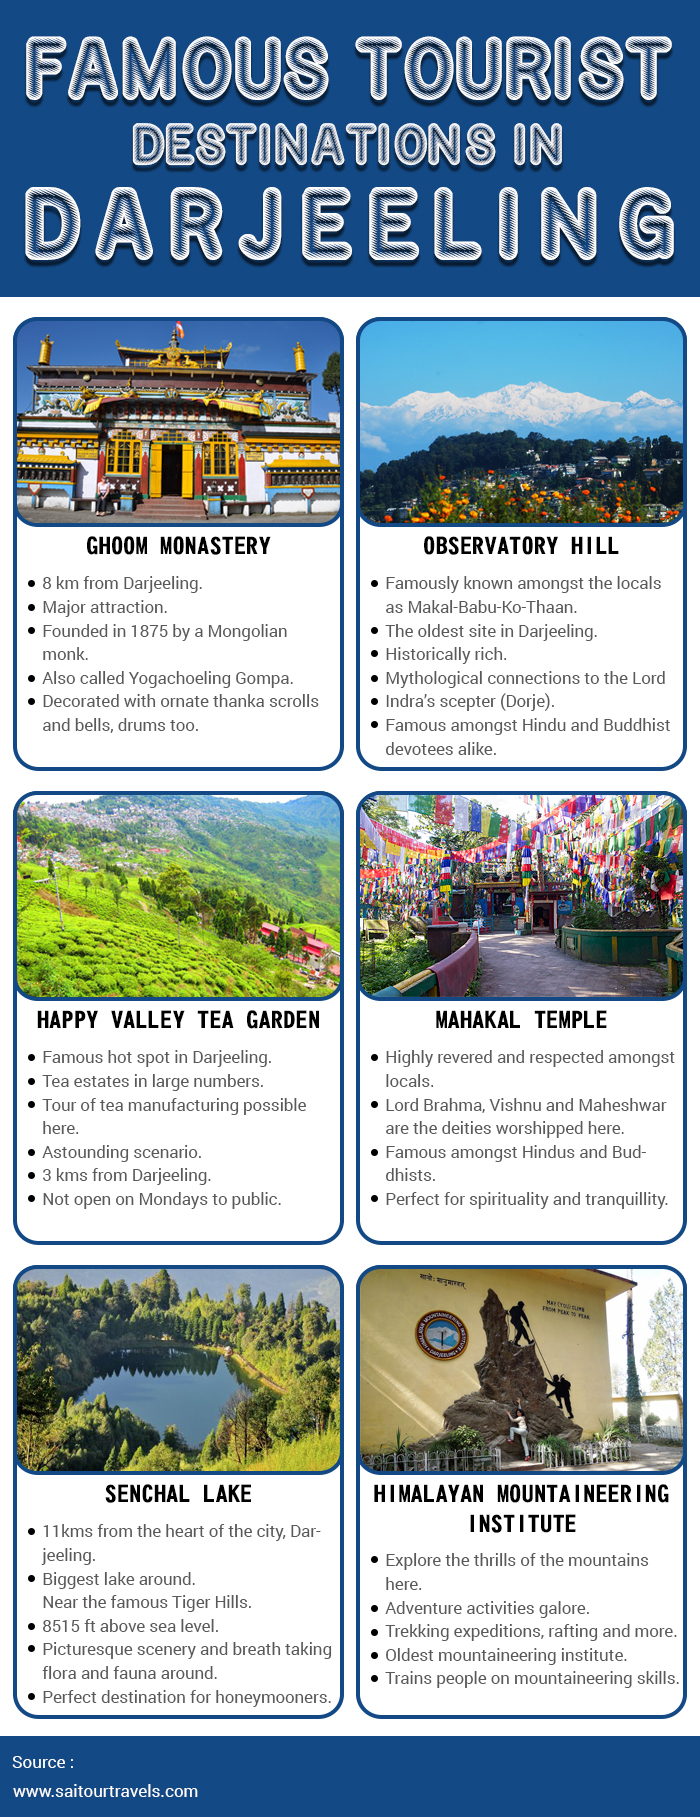 Famous Tourist Destinations in Darjeeling